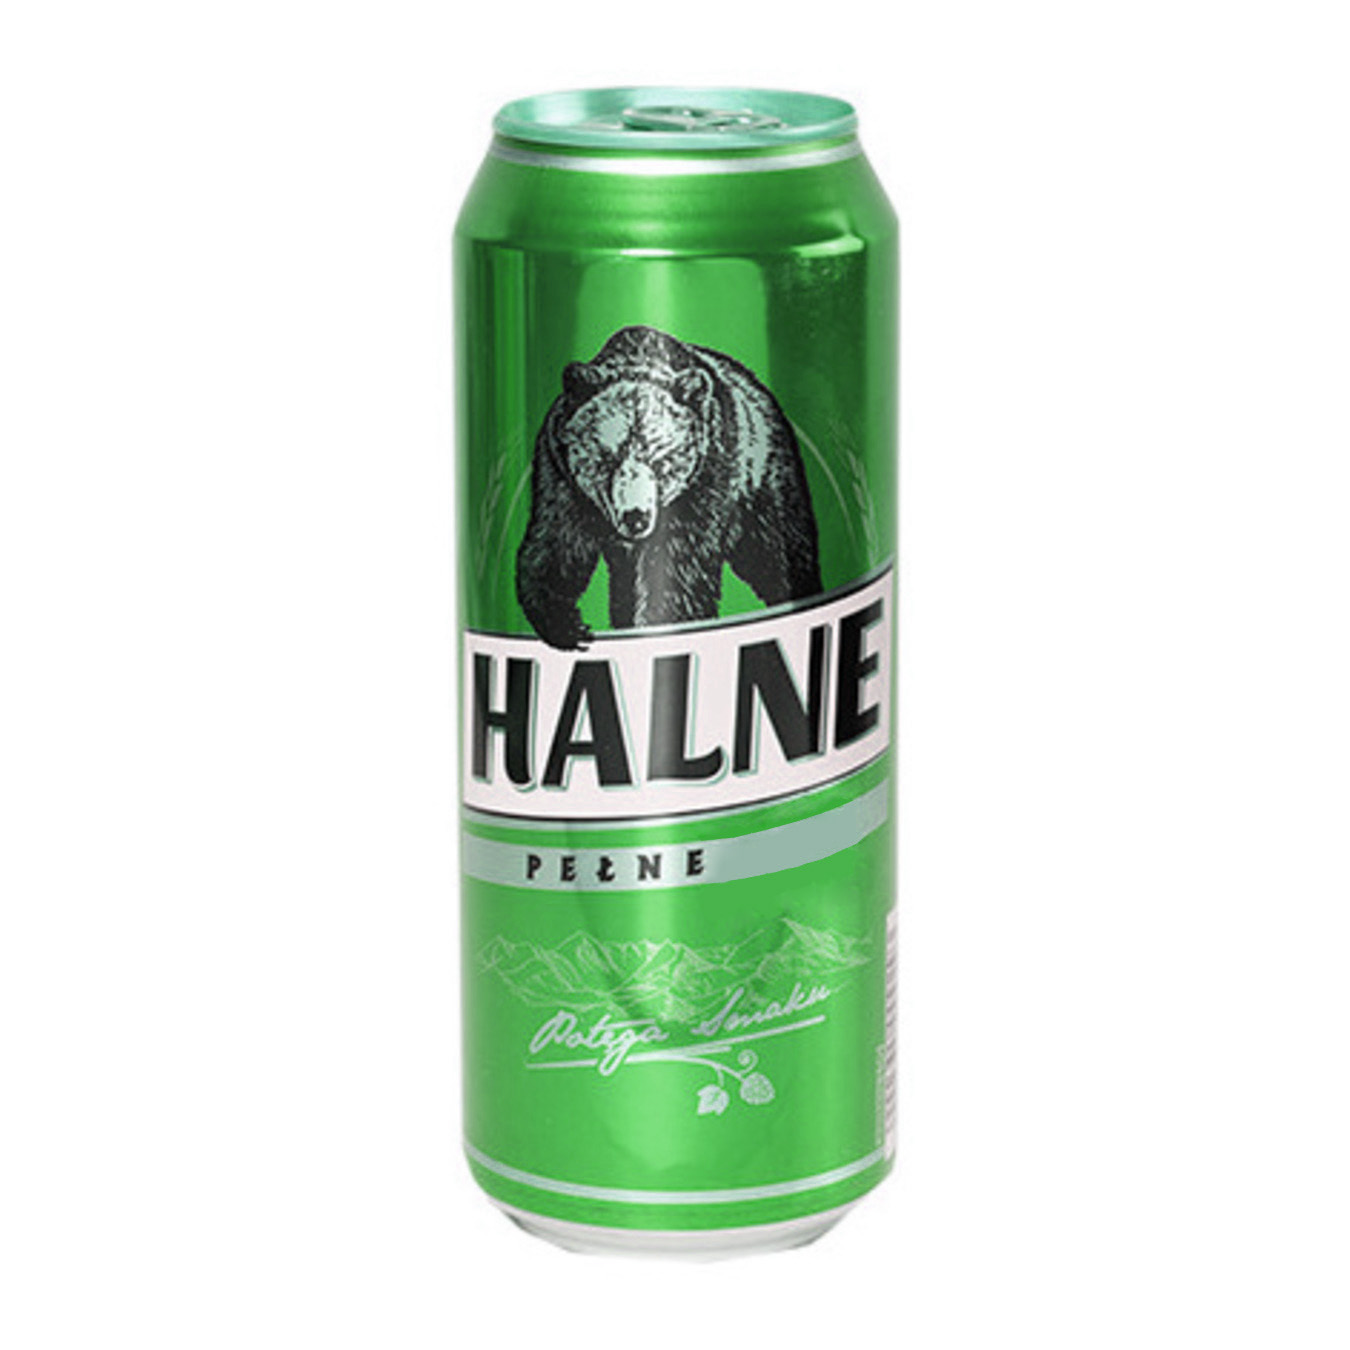 Пиво Halne Jasne Pelne 5% 0,5л